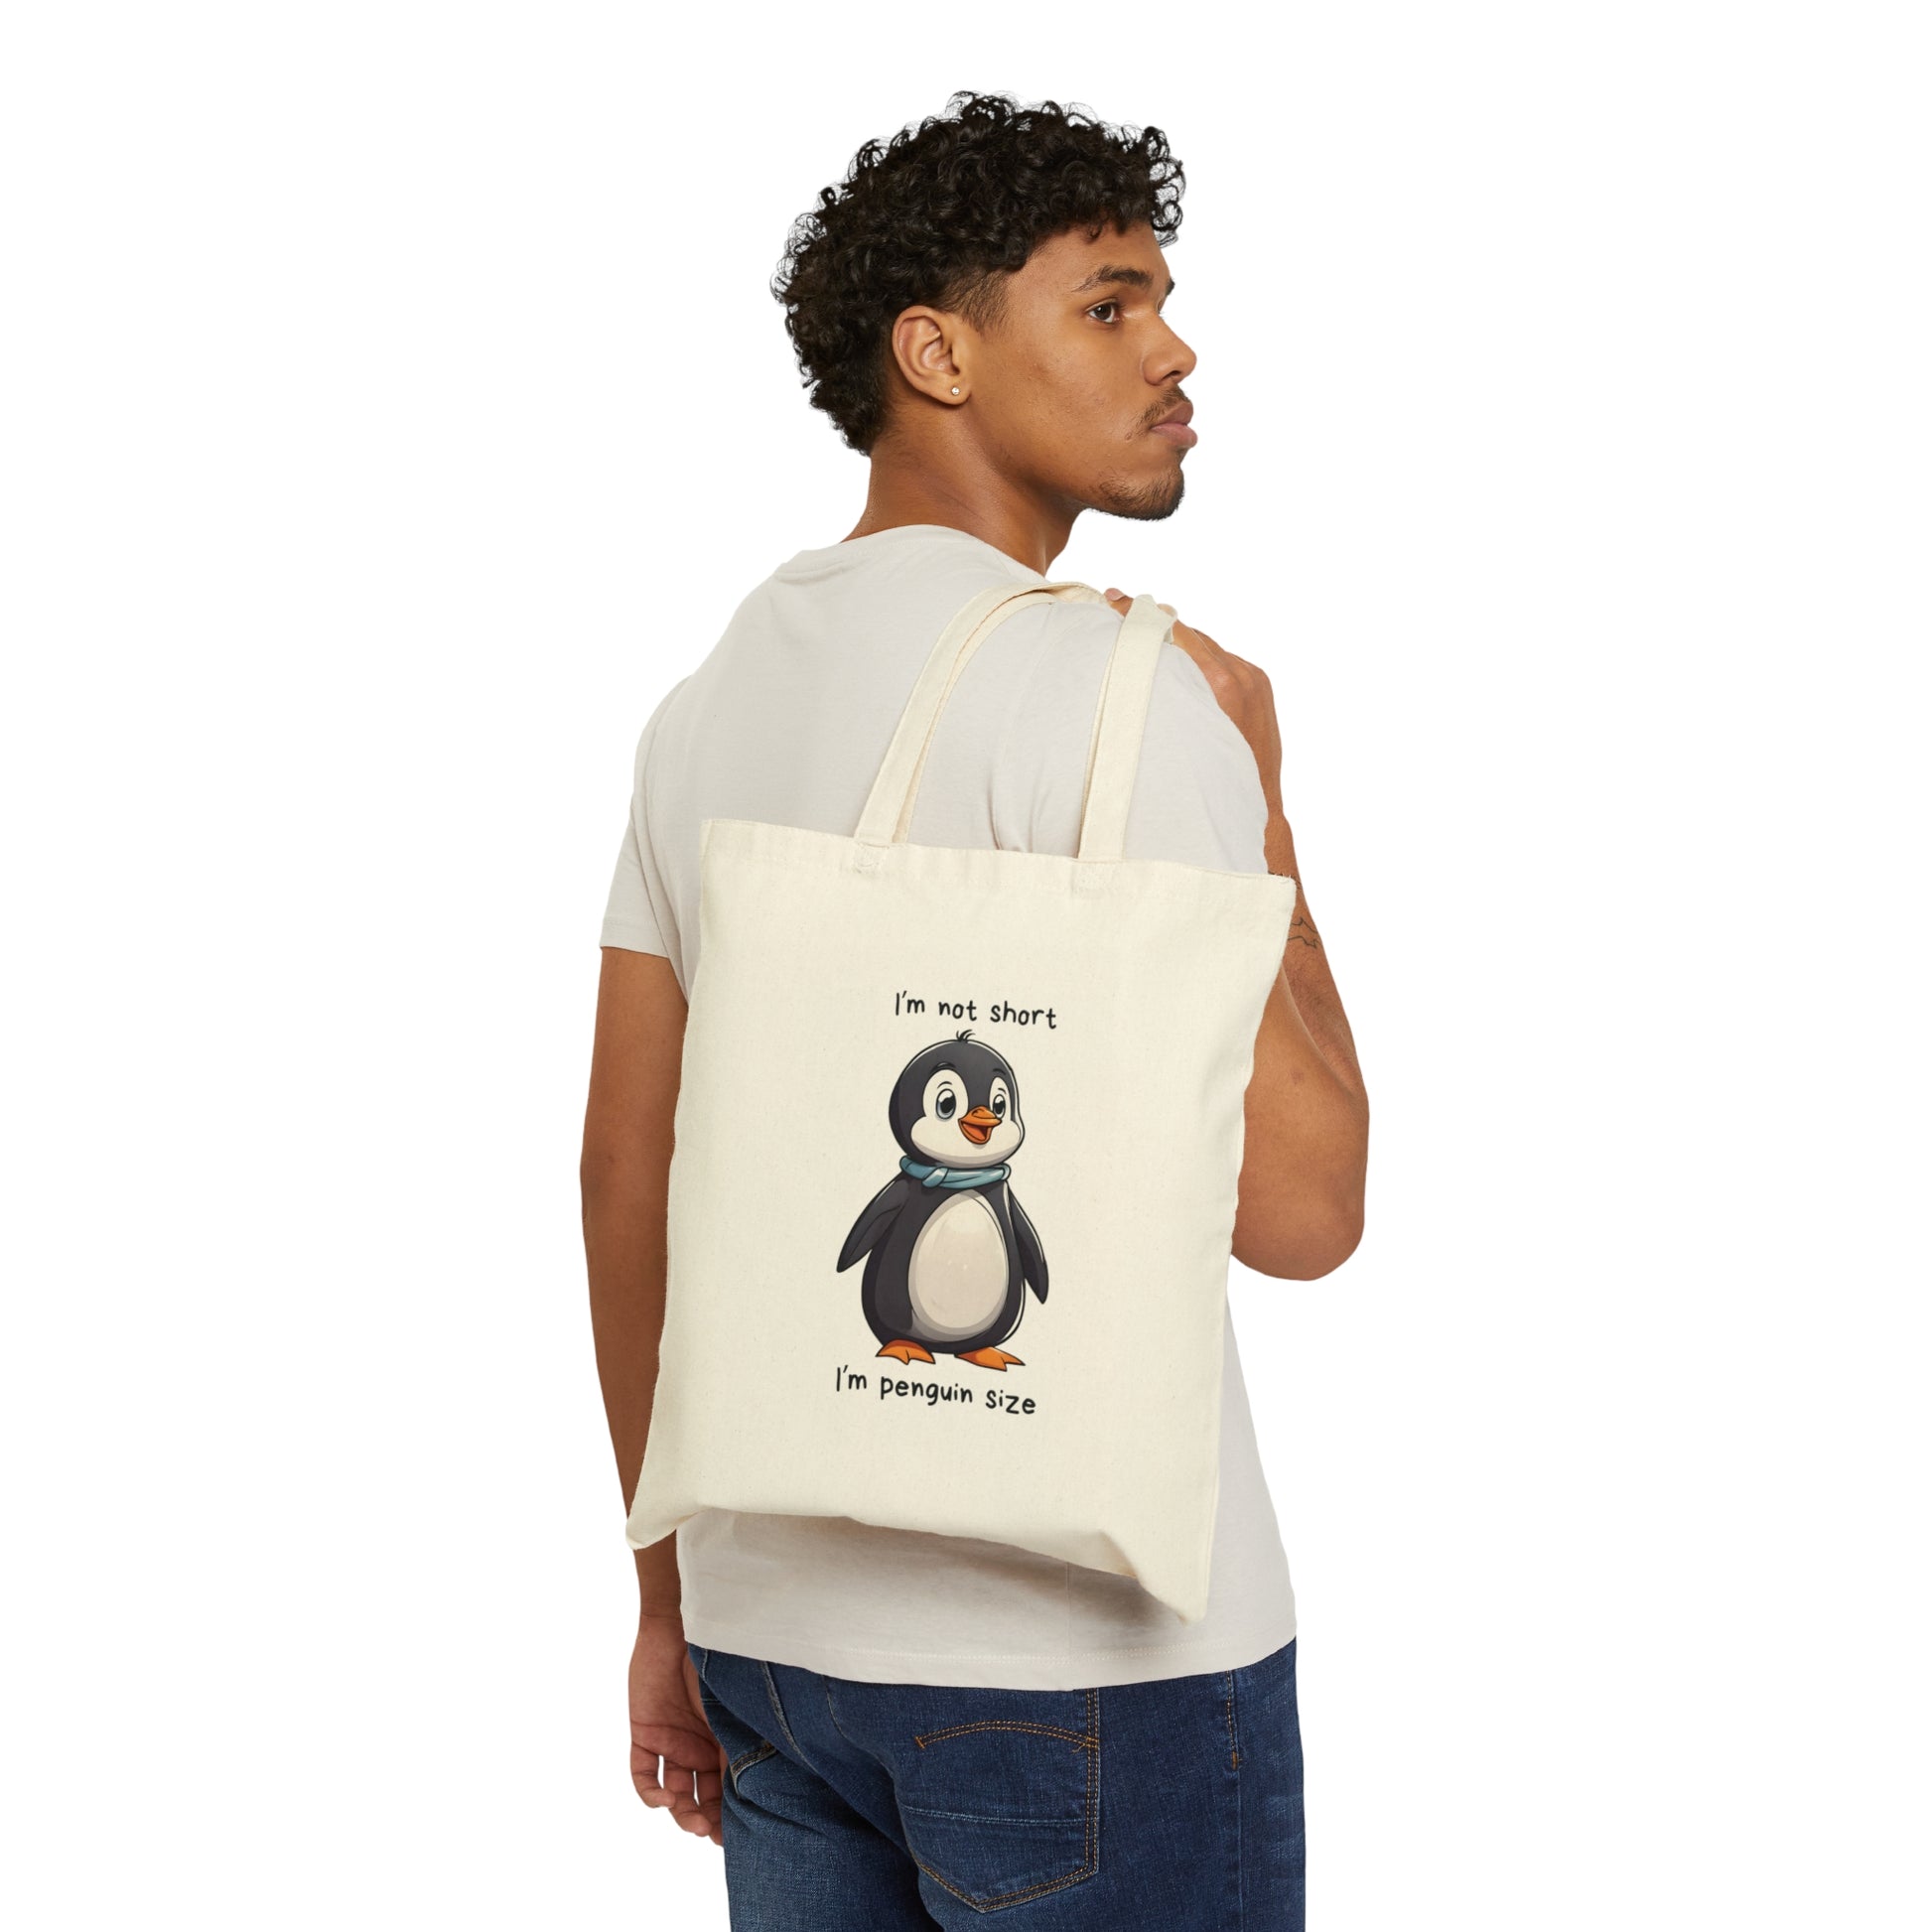 Tote Bag Cute Penguin Size